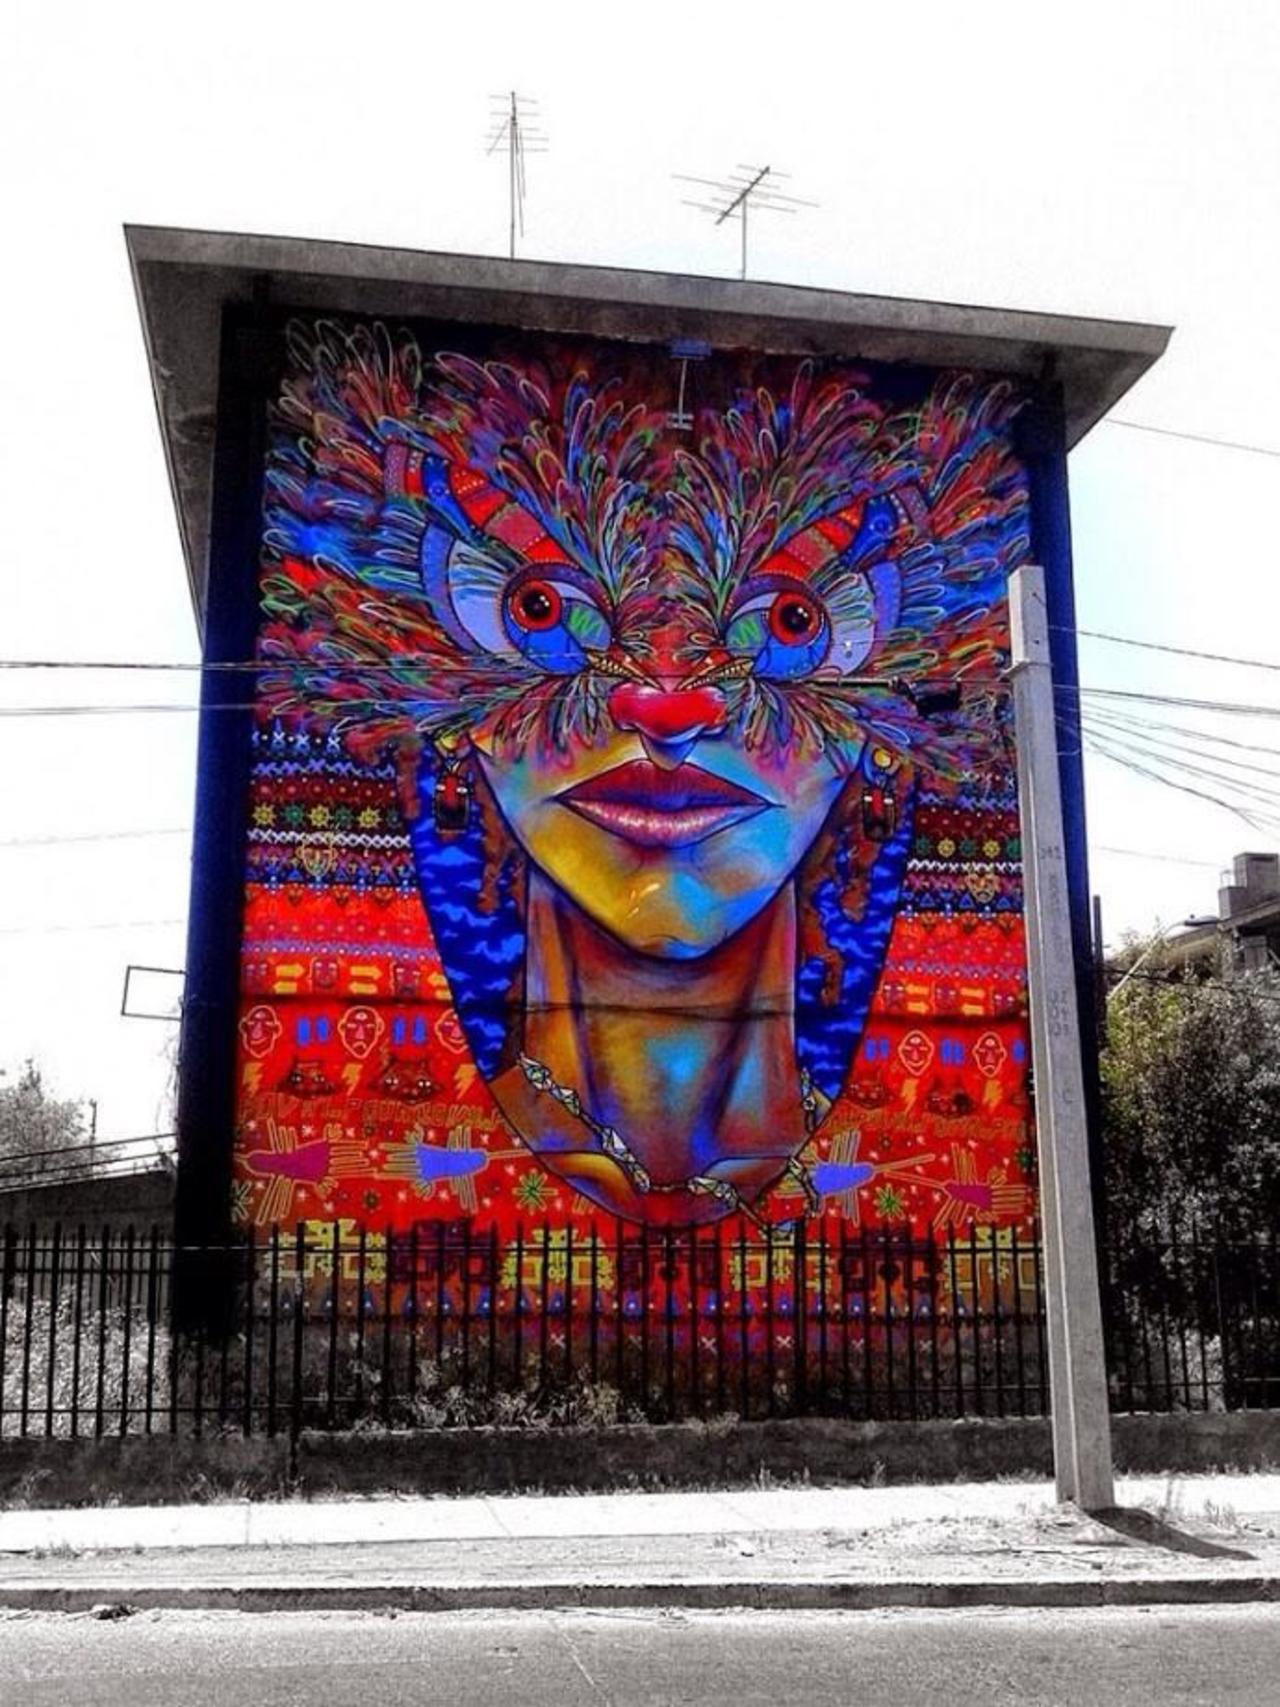 Artist Charquipunk located in San Miguel Santiago Chile #Art #mural #graffiti #streetart http://t.co/c8UOm6WKVb